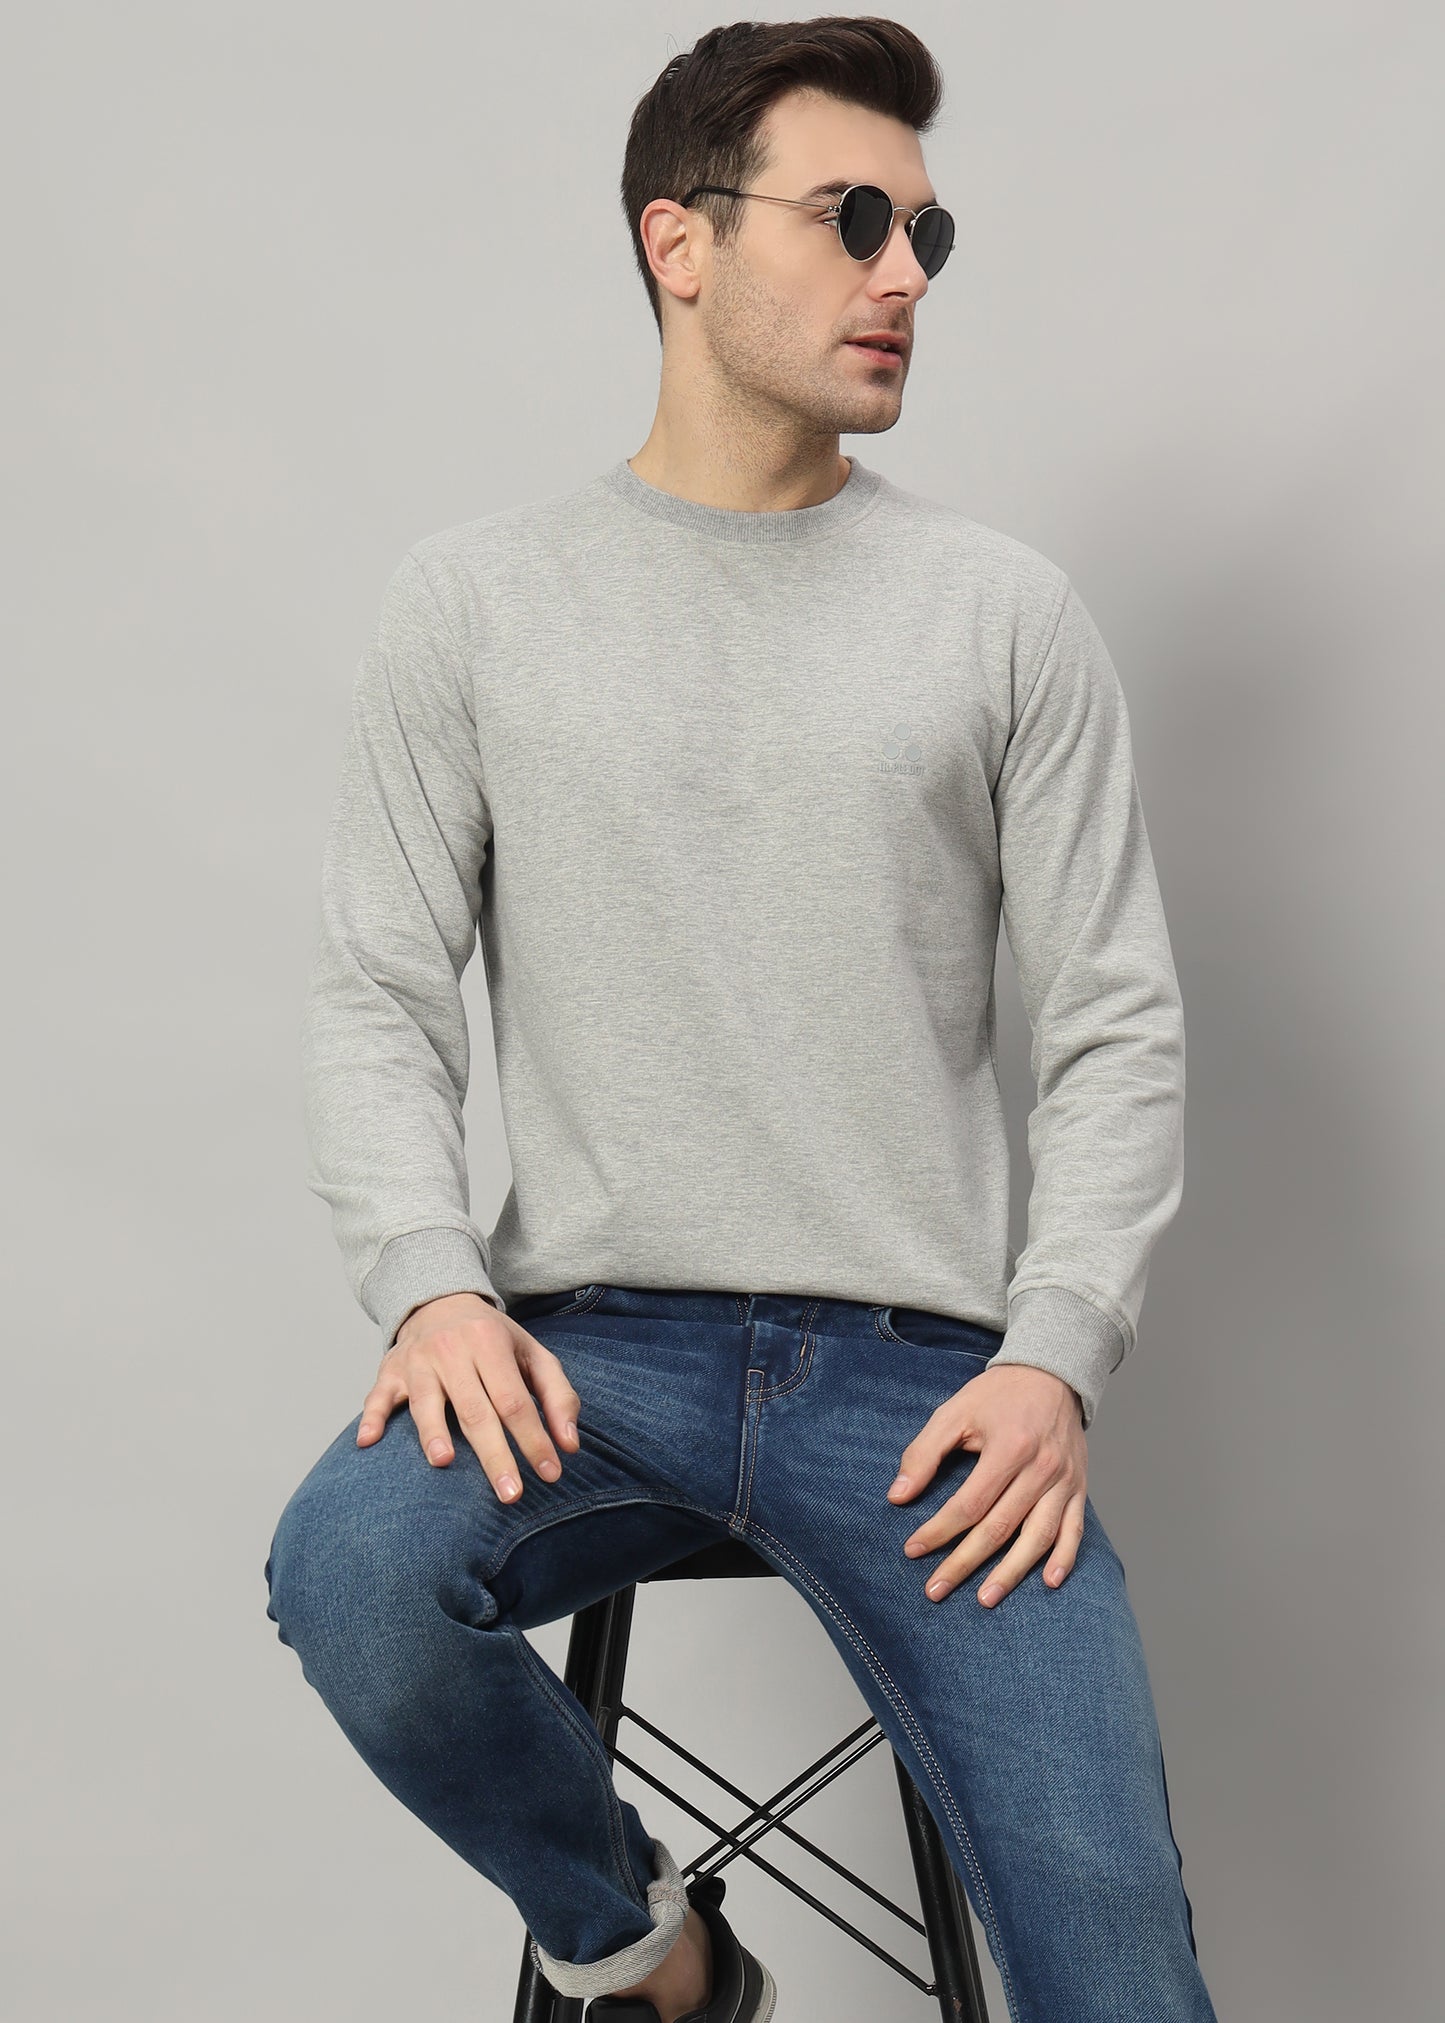 Full Sleeve Cotton Sweat T-Shirt for Men's